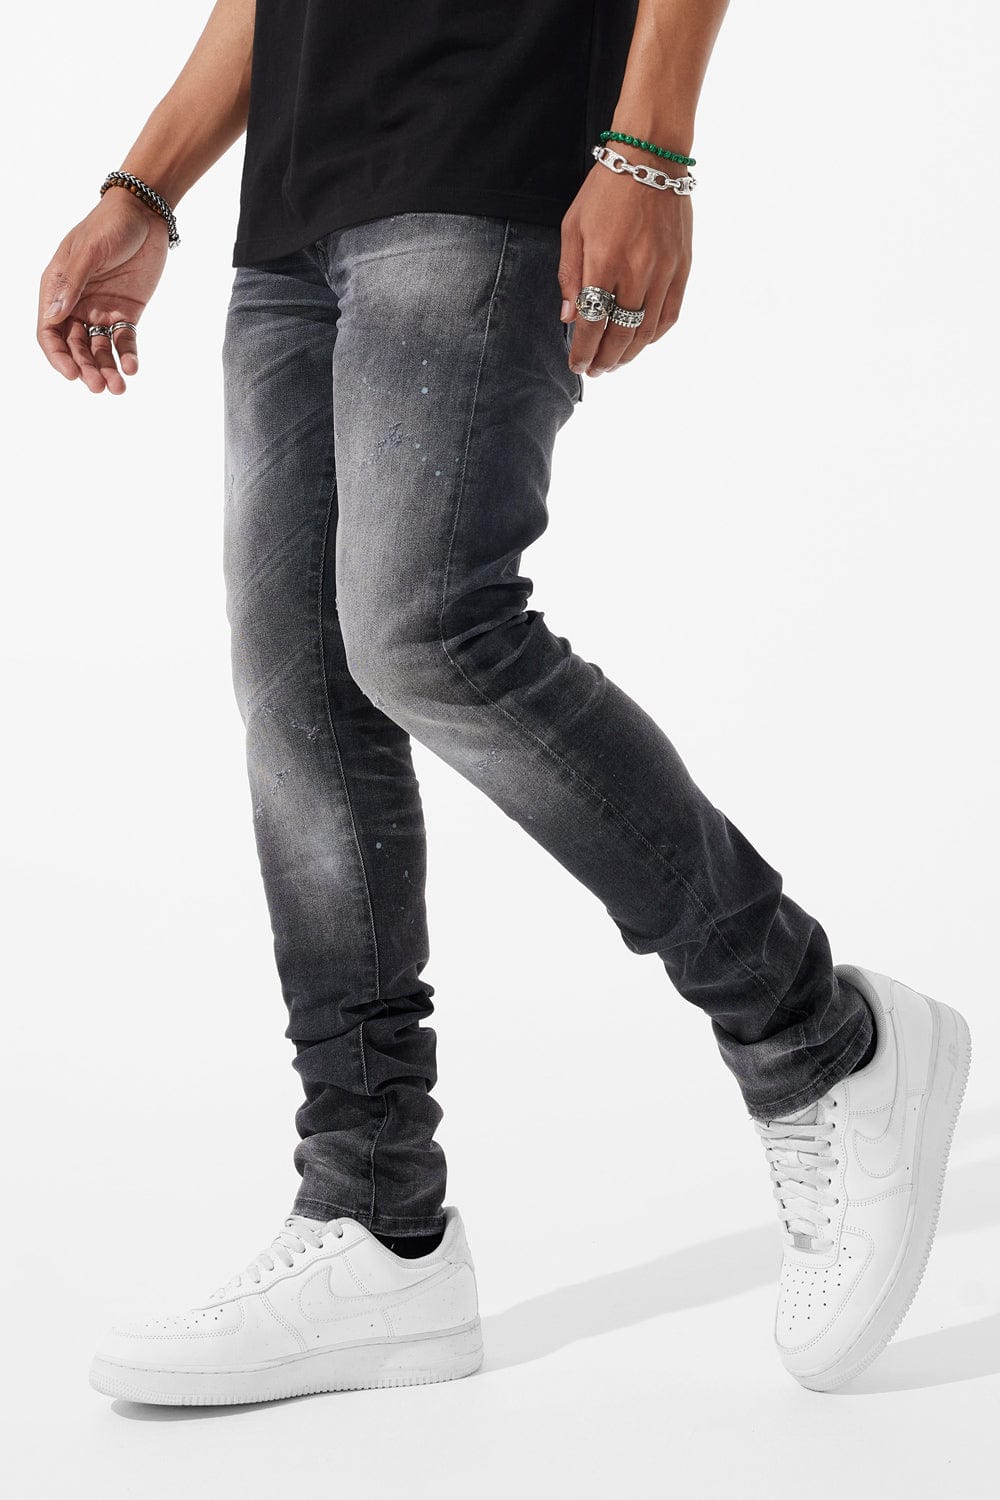 JC Random GERONIMO slim jeans Black ice  js1189